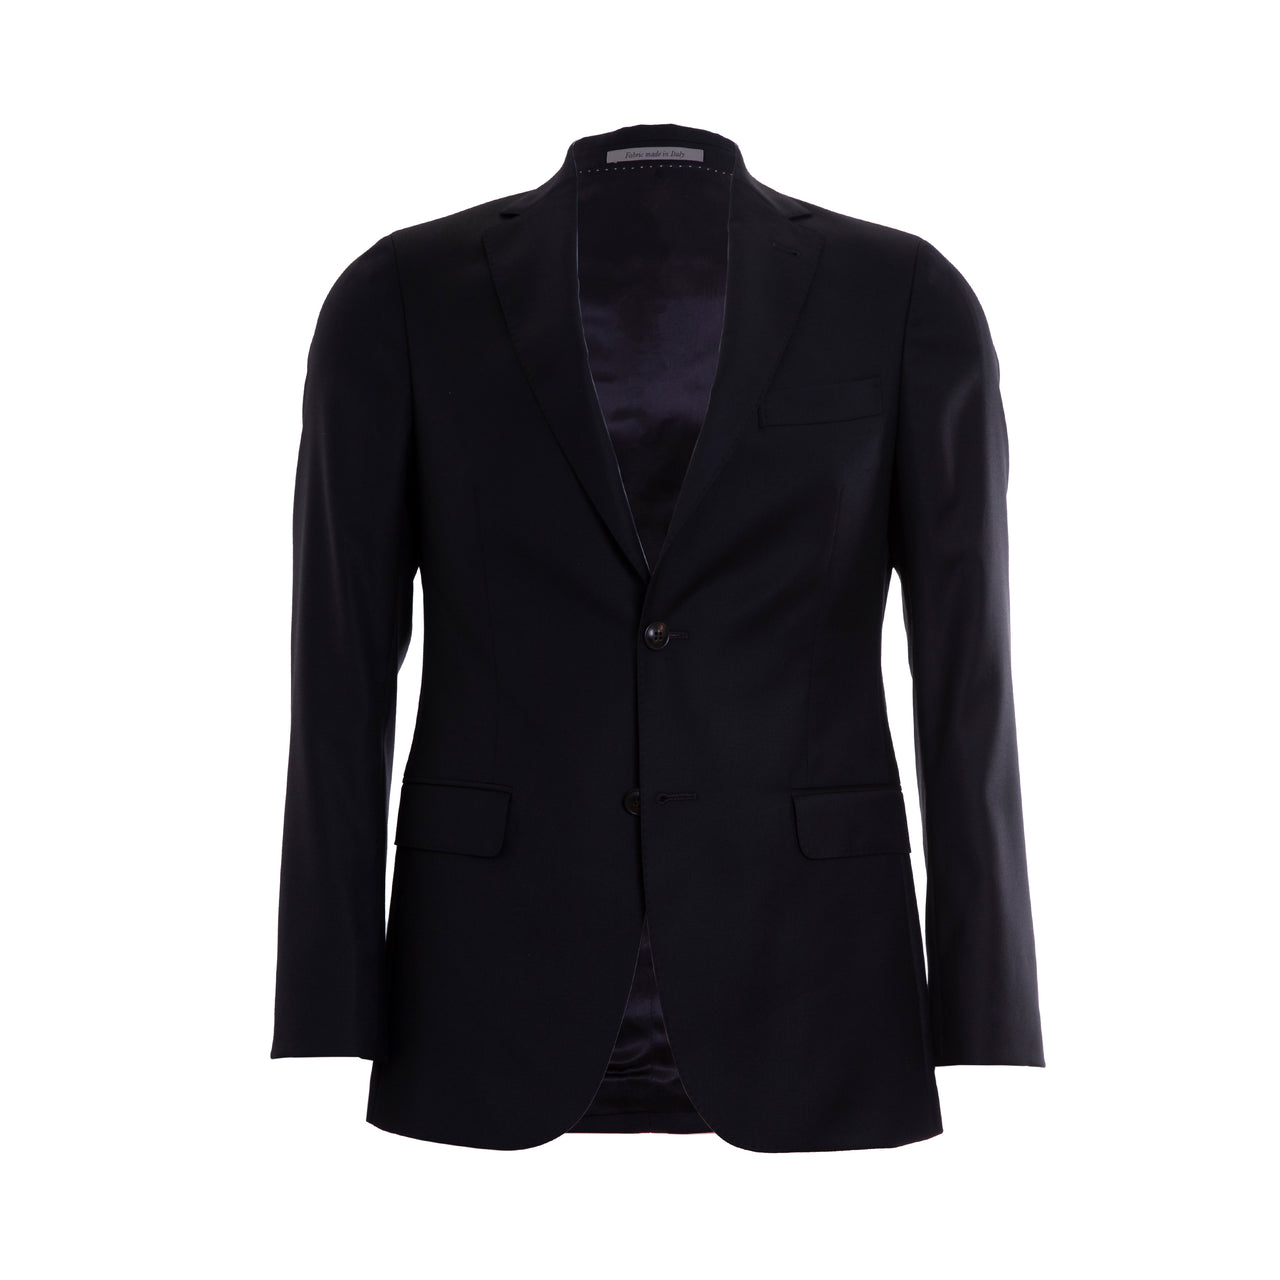 HENRY BUCKS Wool Plain Suit BLACK REG